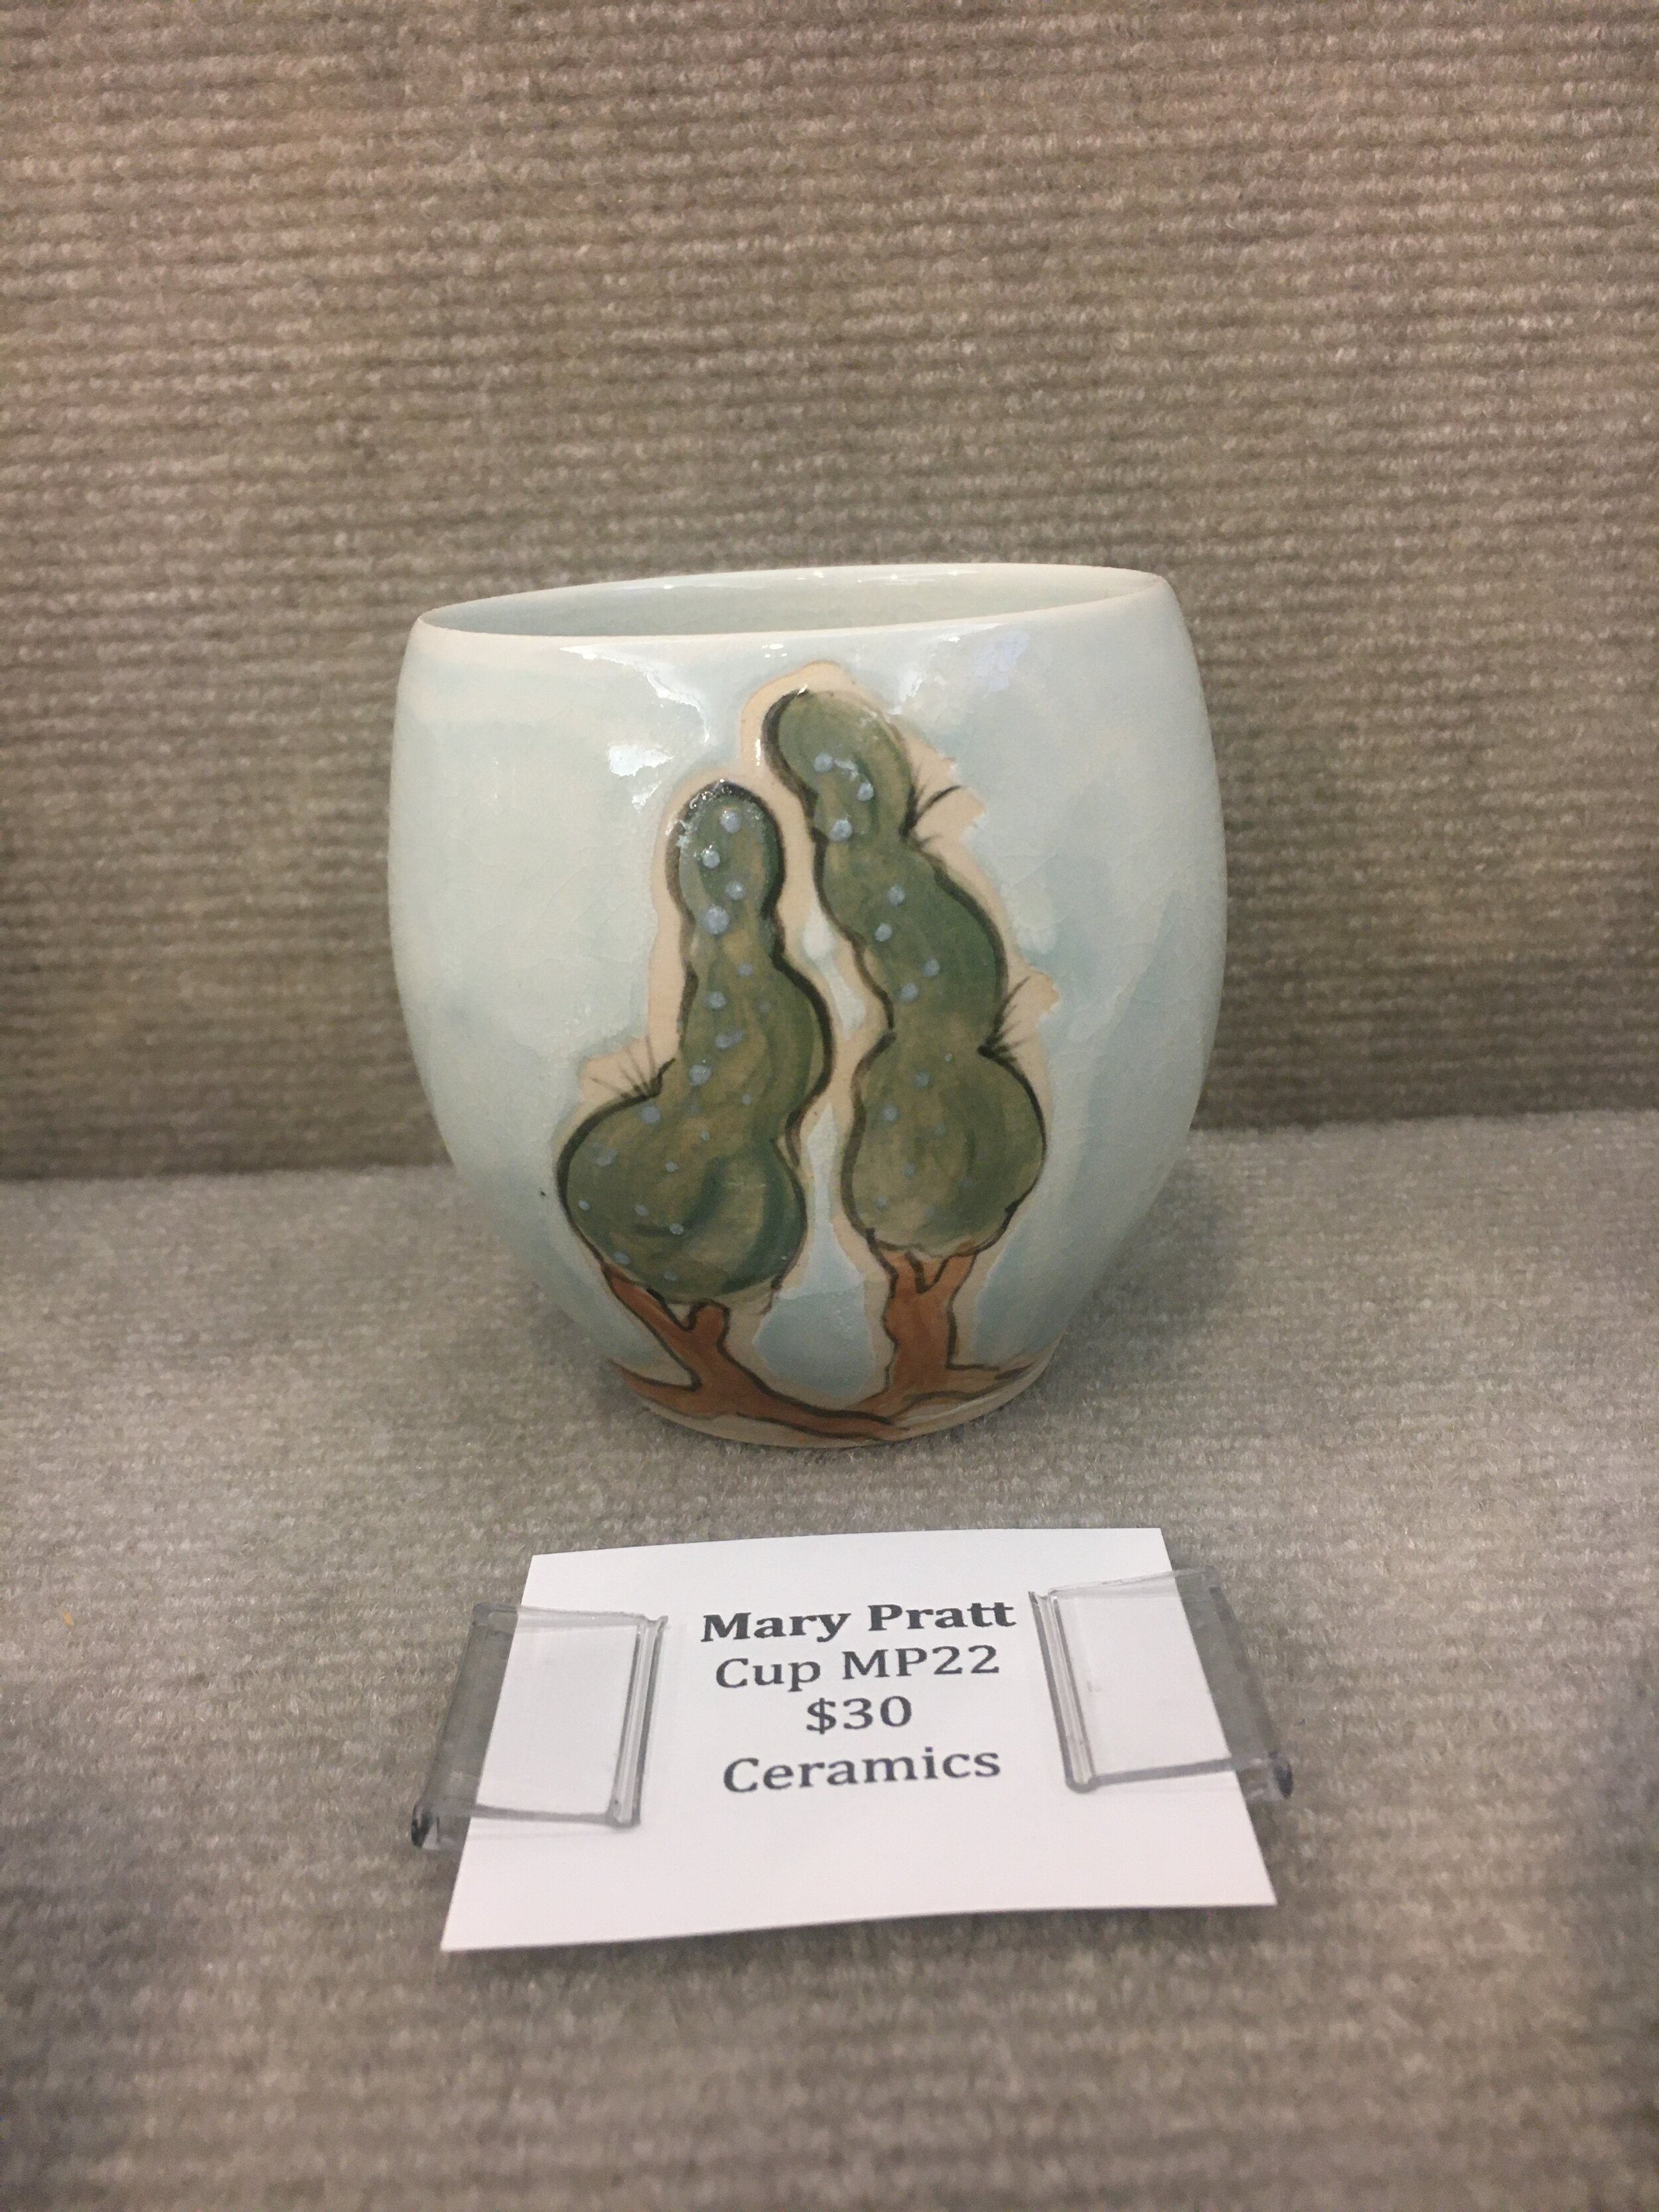 Cup MP22 - Mary Pratt